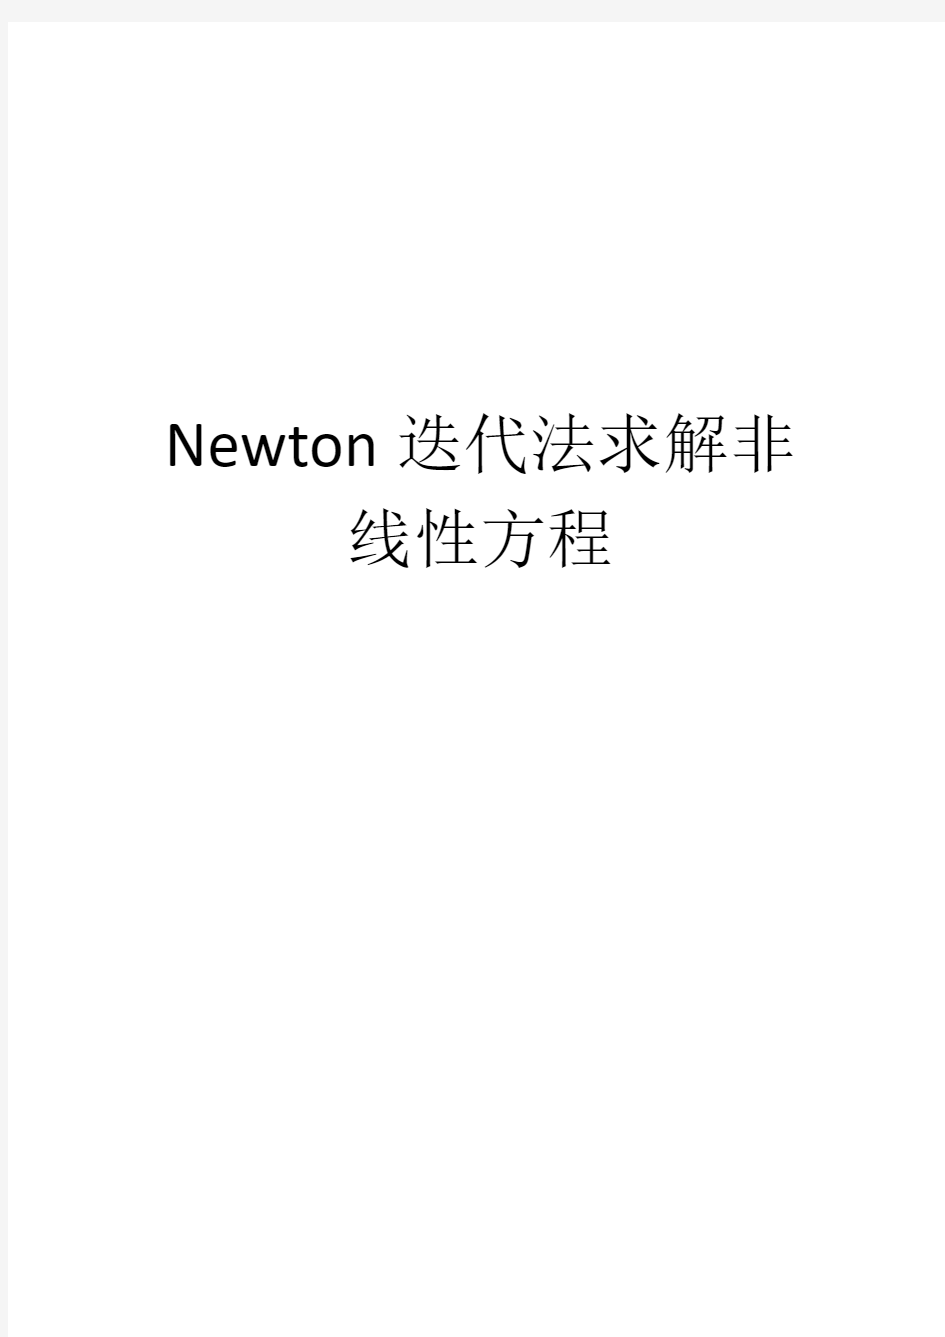 Newton迭代法求解非线性方程